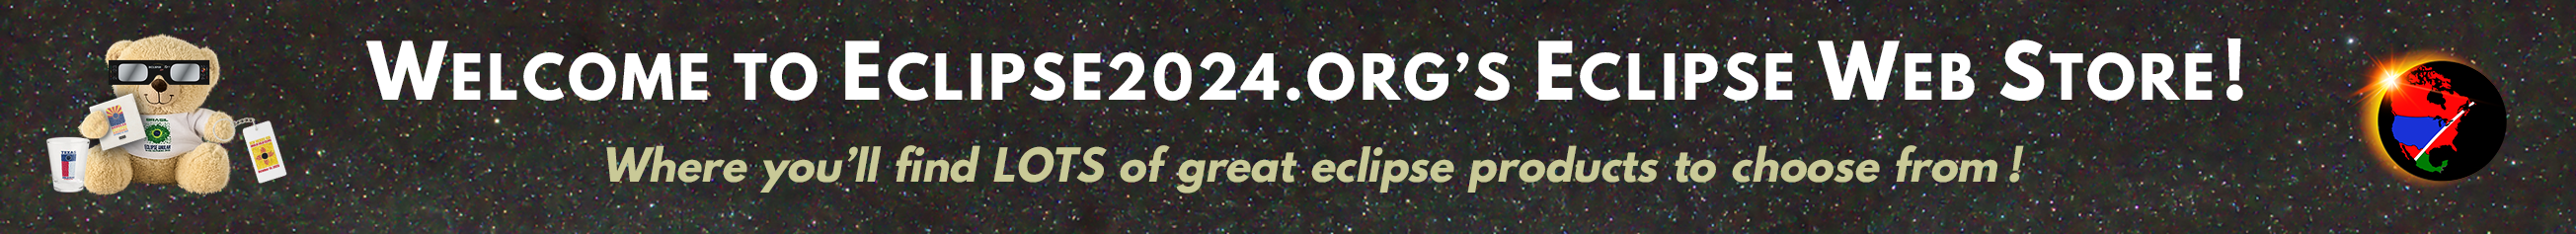 Eclipse2024.org Eclipse web store